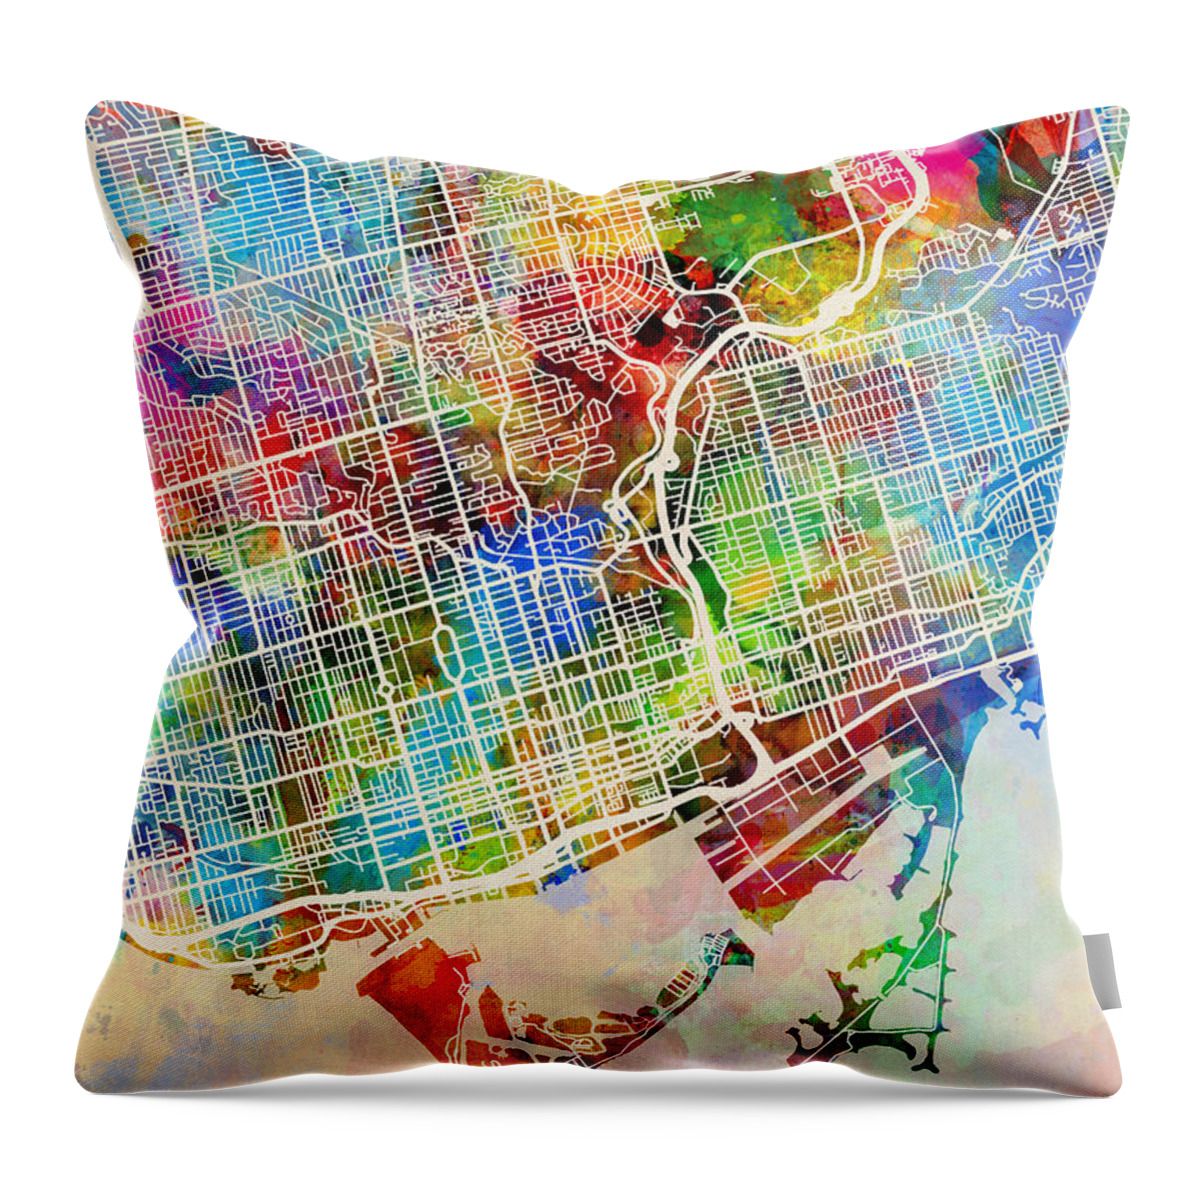 Toronto Throw Pillow featuring the digital art Toronto Street Map #7 by Michael Tompsett